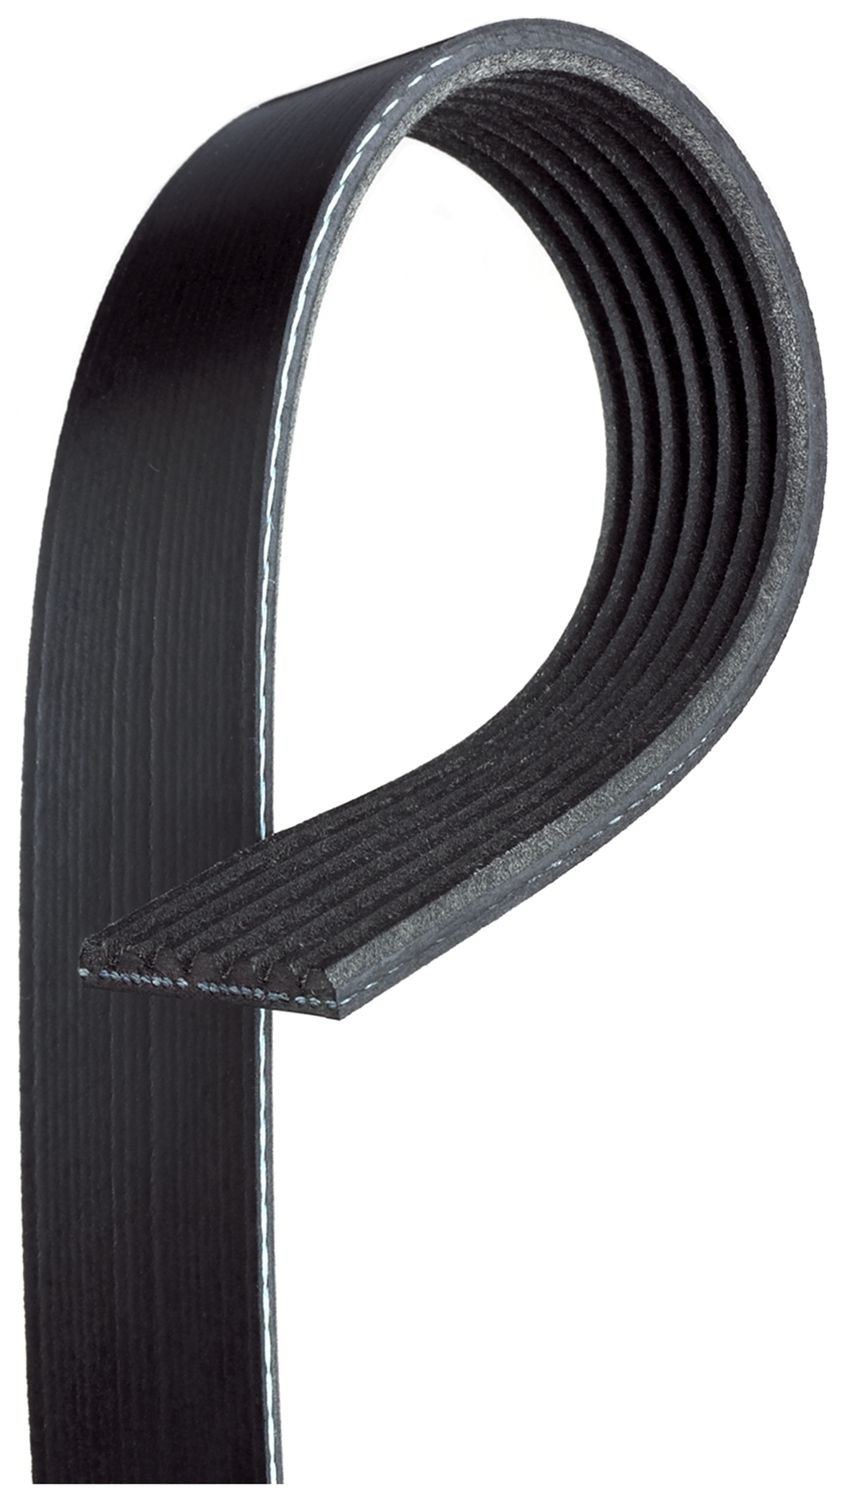 GATES 7PK2683 Serpentine belt 2683mm, 7, G-Force™ C12™ CVT Belt